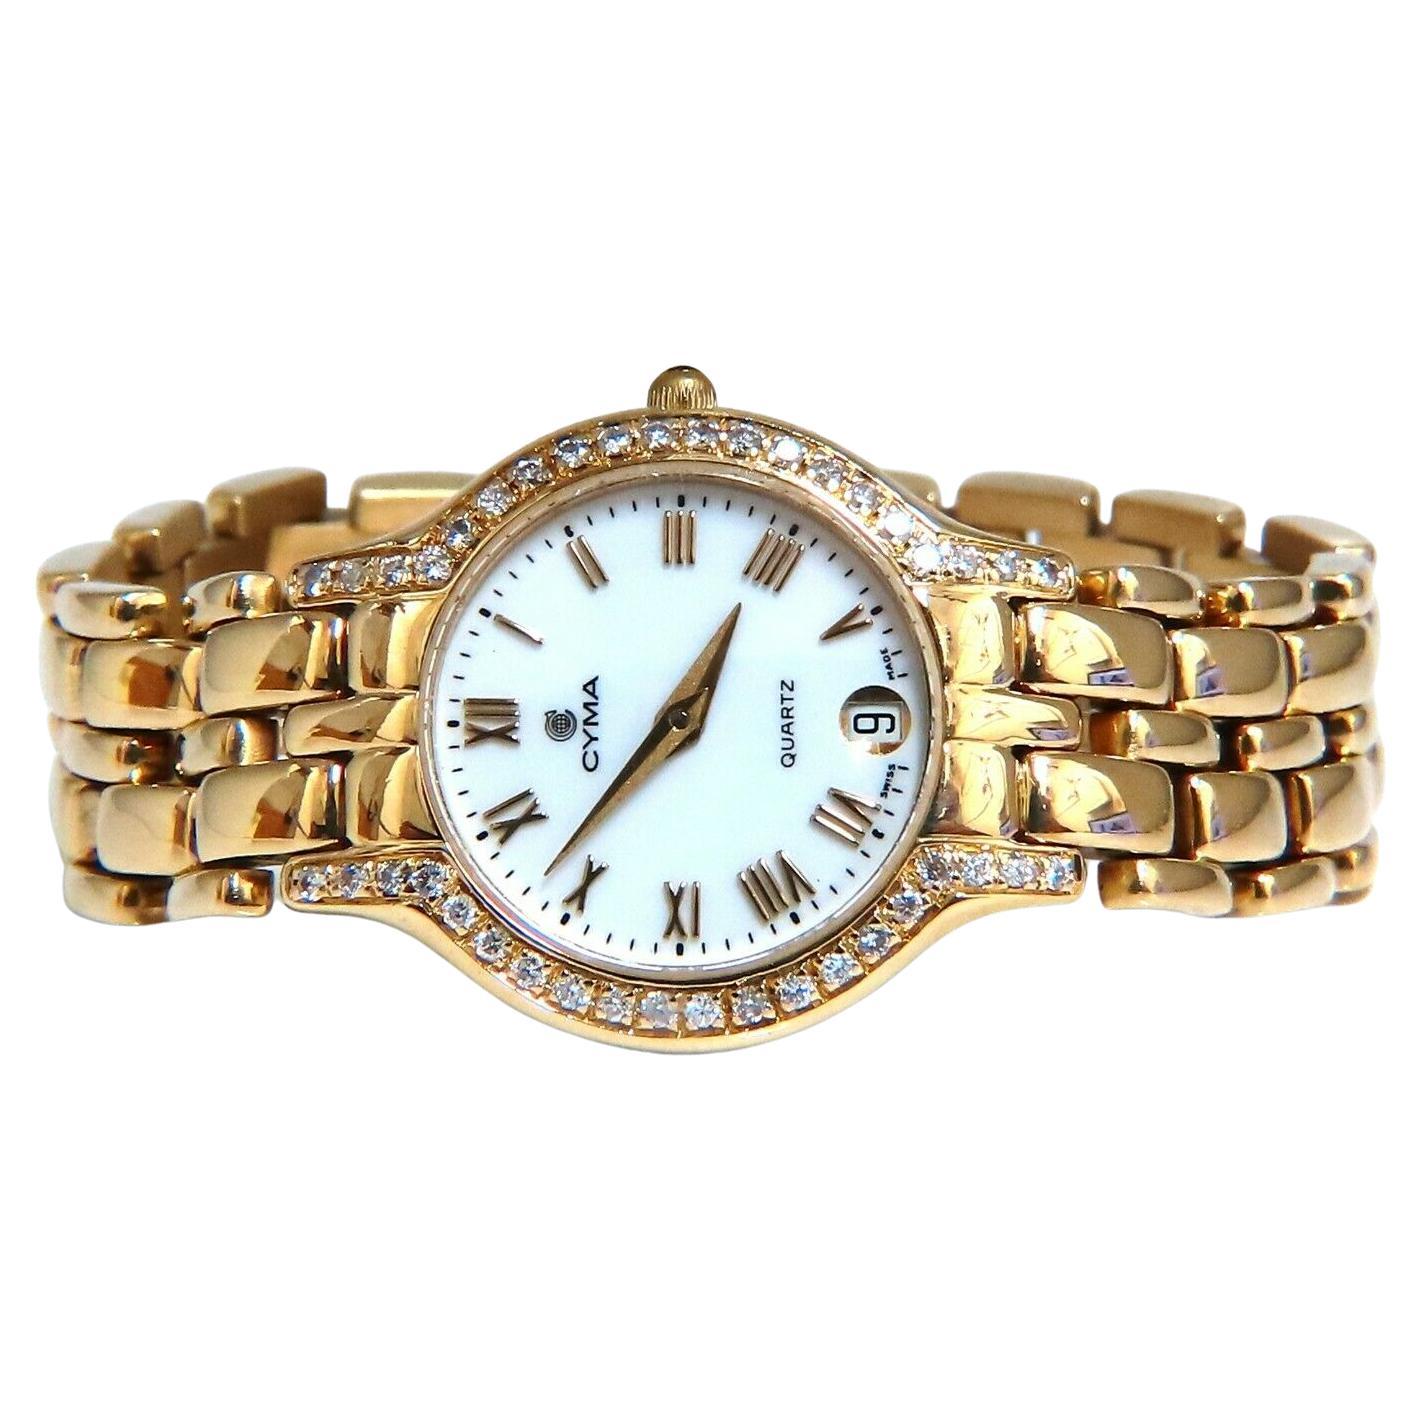 Japanese quartz women's watch -1980's Jewellery Watches Wrist Watches Womens Wrist Watches NOS,vintage women's watch elegant gift for her CITIZEN mint 